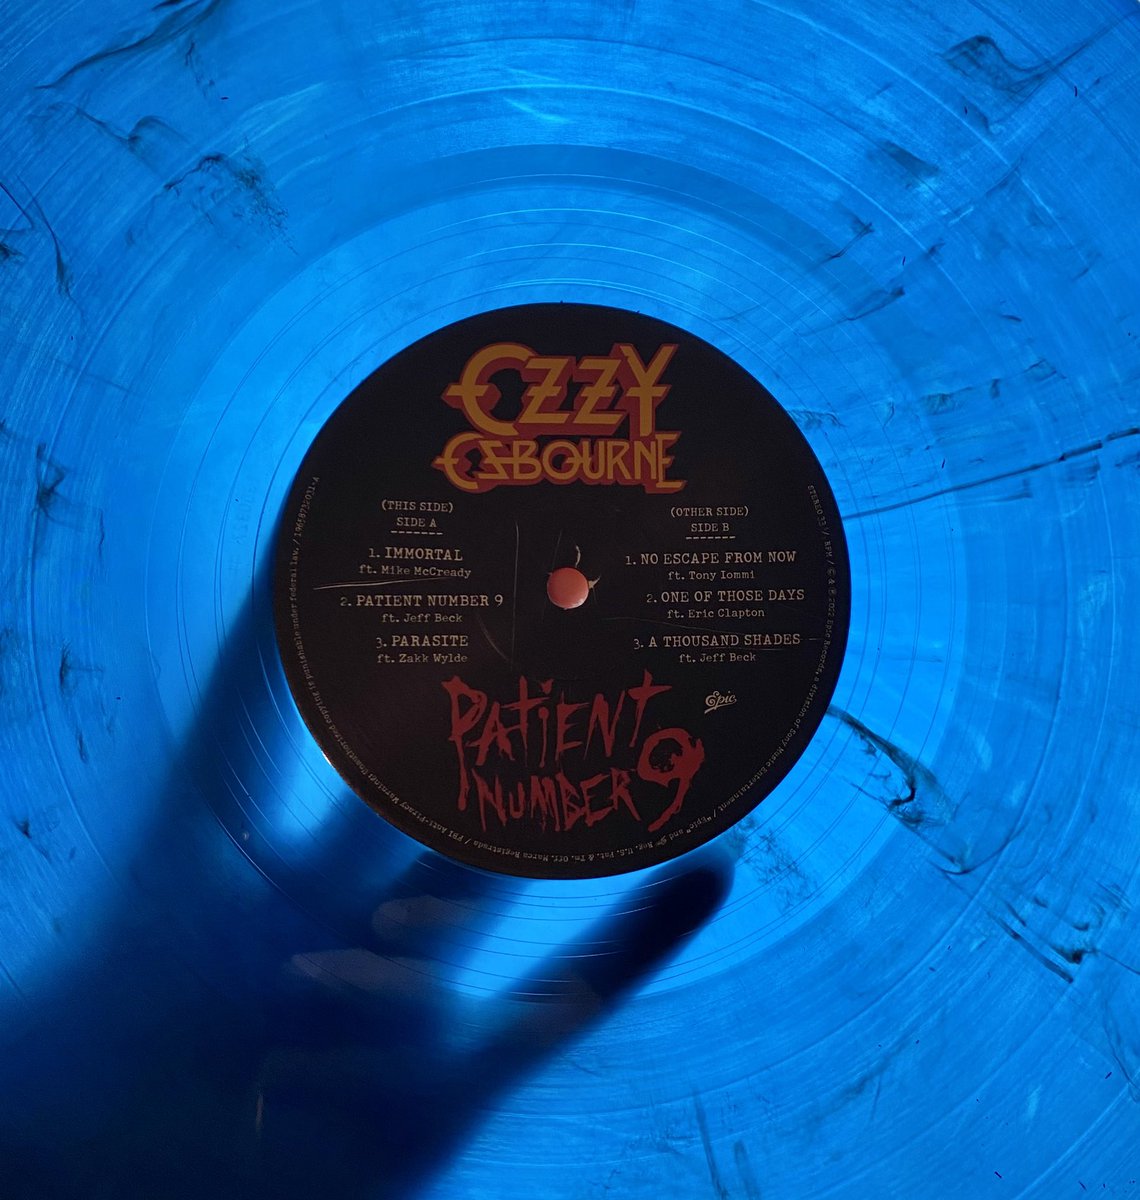 Already rocking out to this blue smoke vinyl 🔥🔥🔥 @OzzyOsbourne #Ozzy #OzzyOsbourne #PatientNumber9